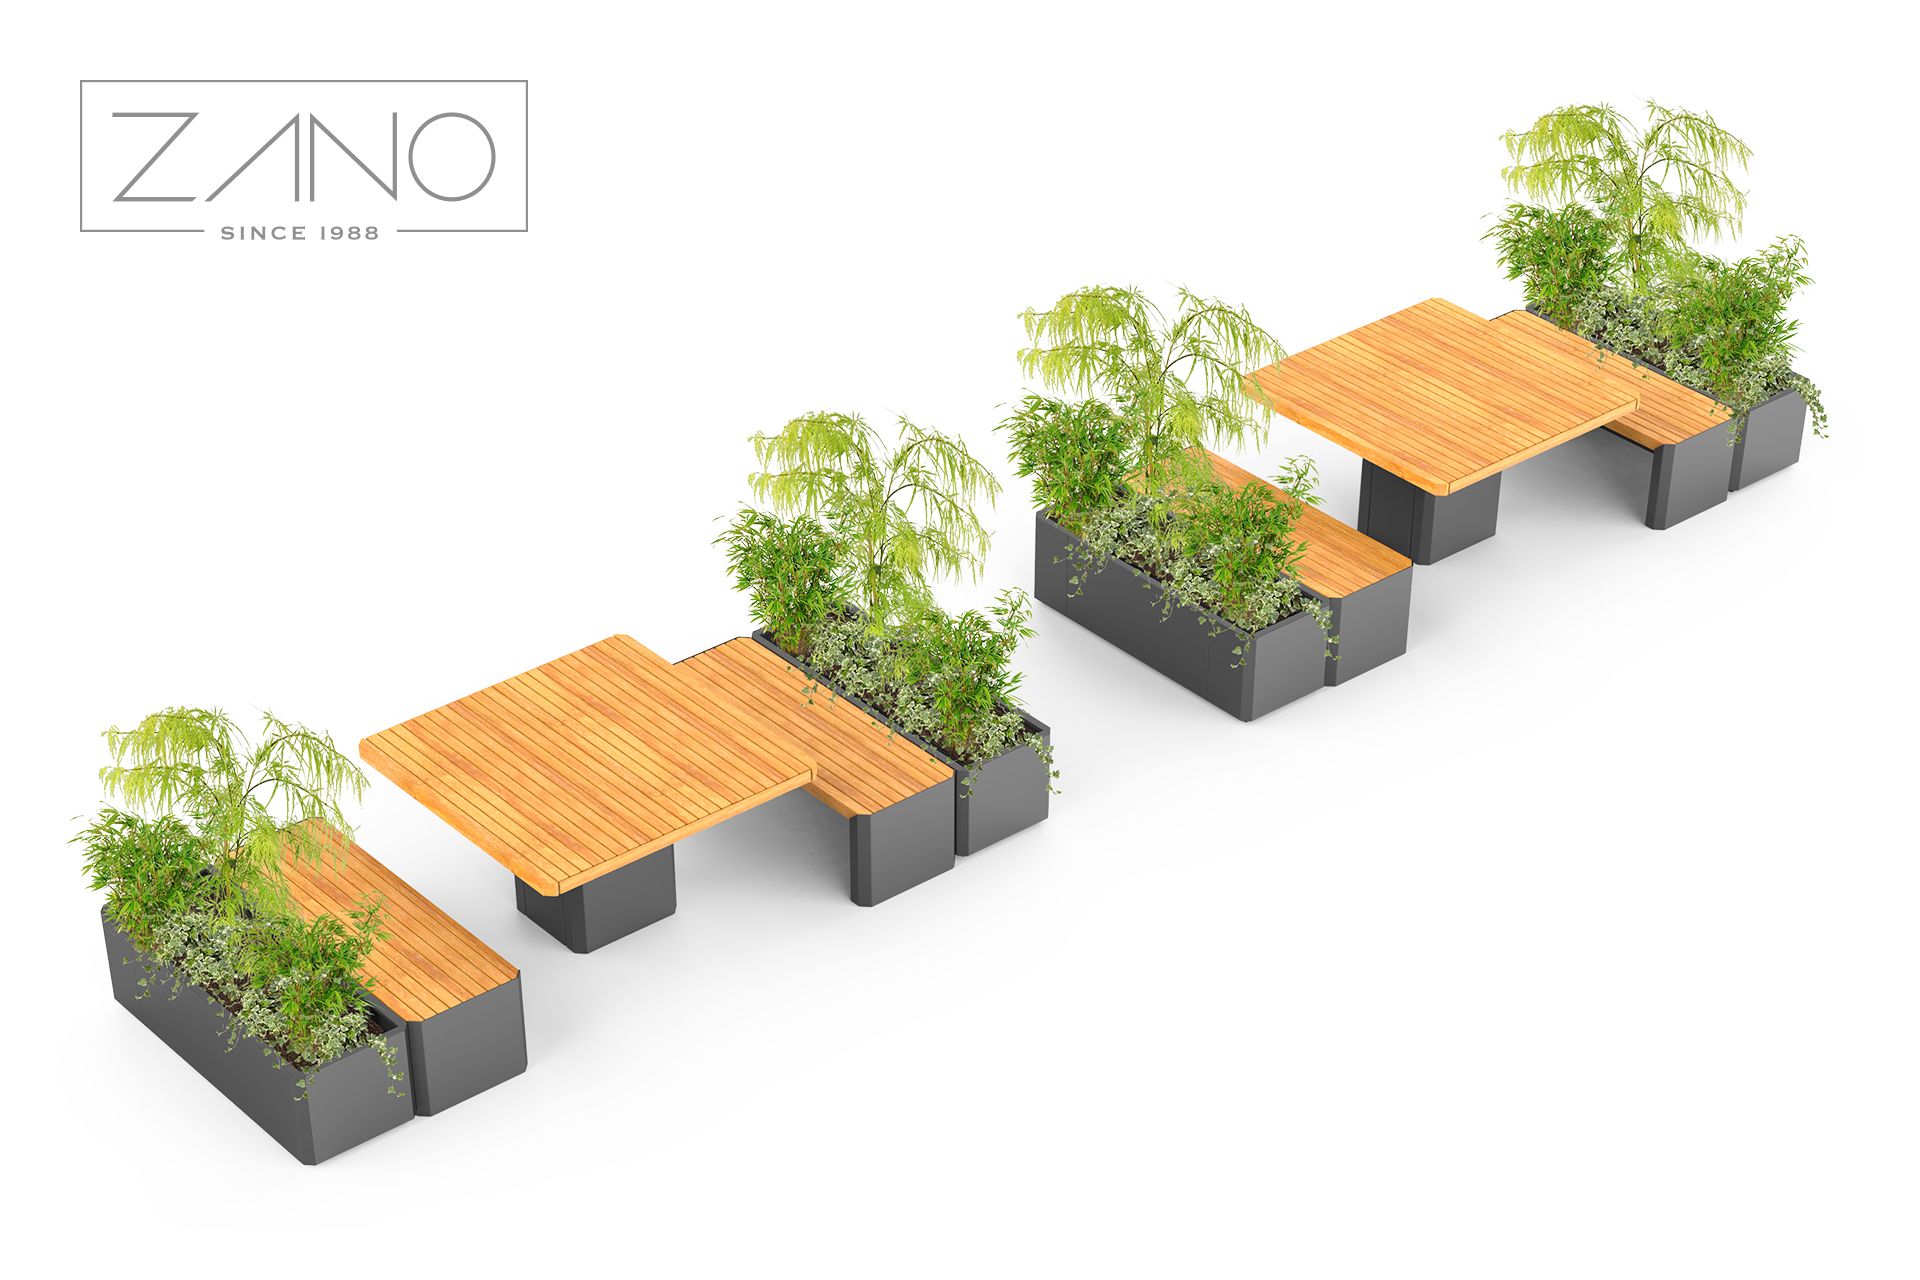 Stilo bench, pot and table layout - ZANO urban furniture